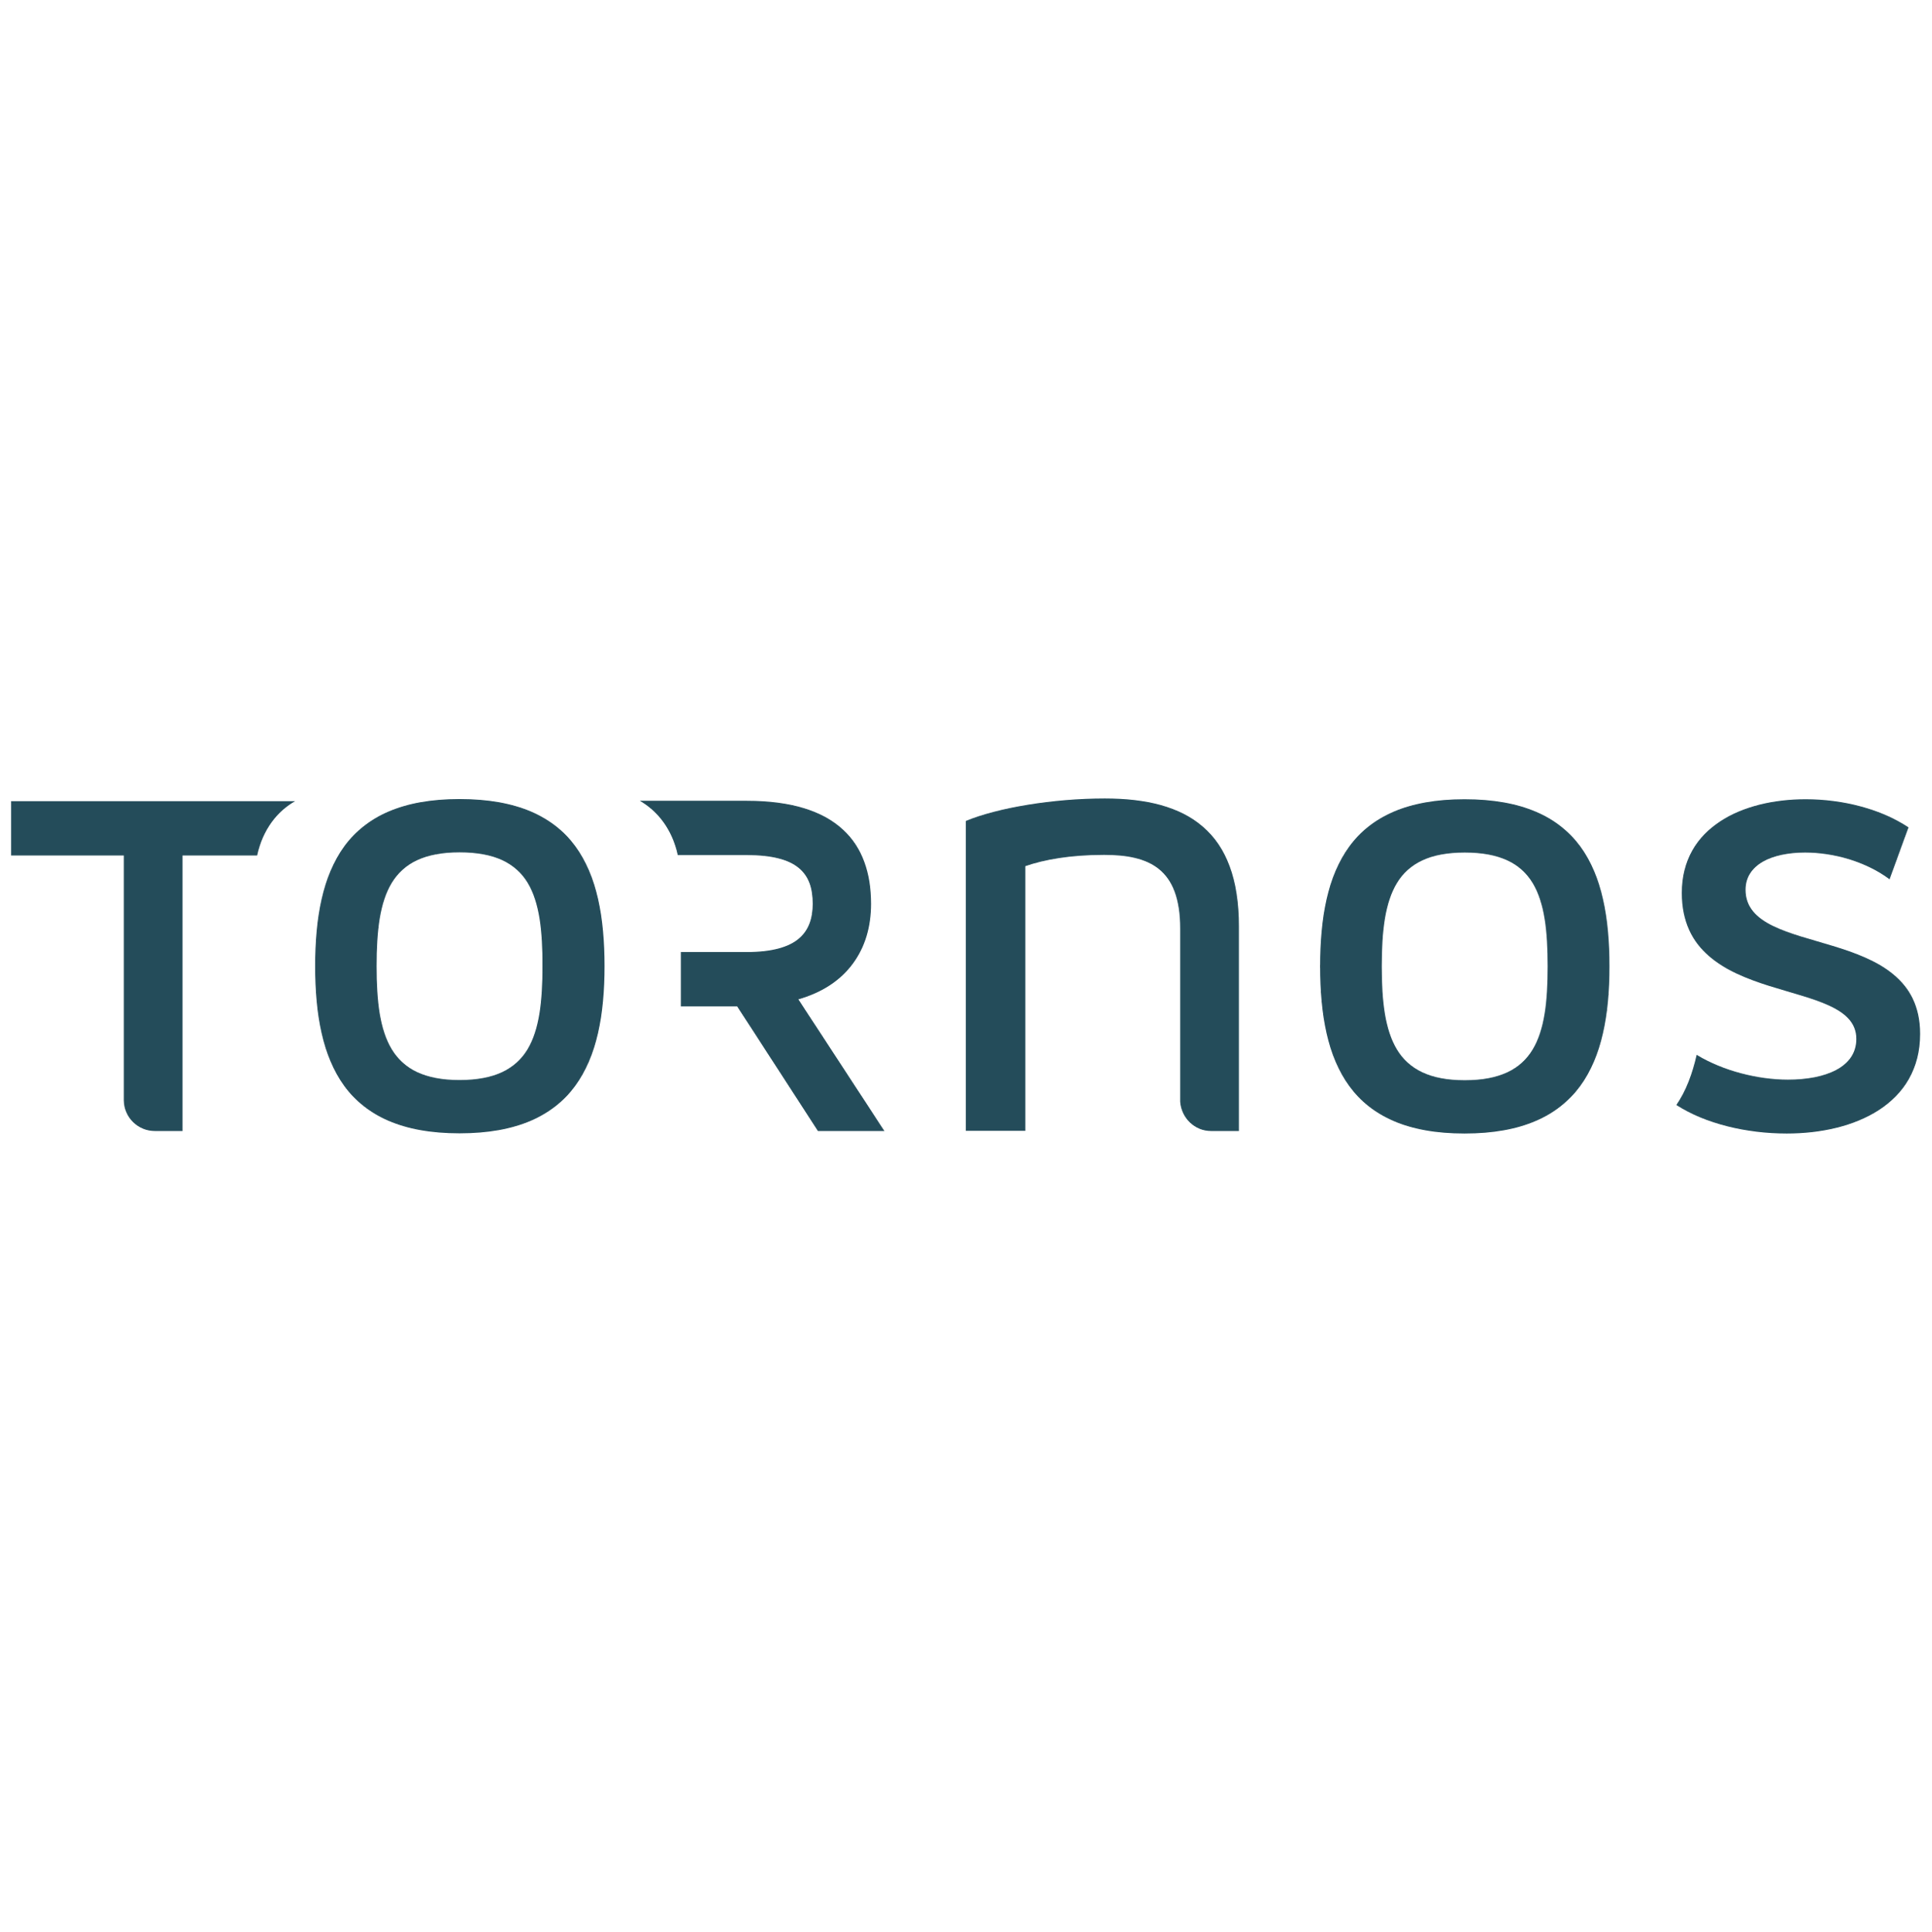 Tornos Bildmarke Logo  Transparent Image